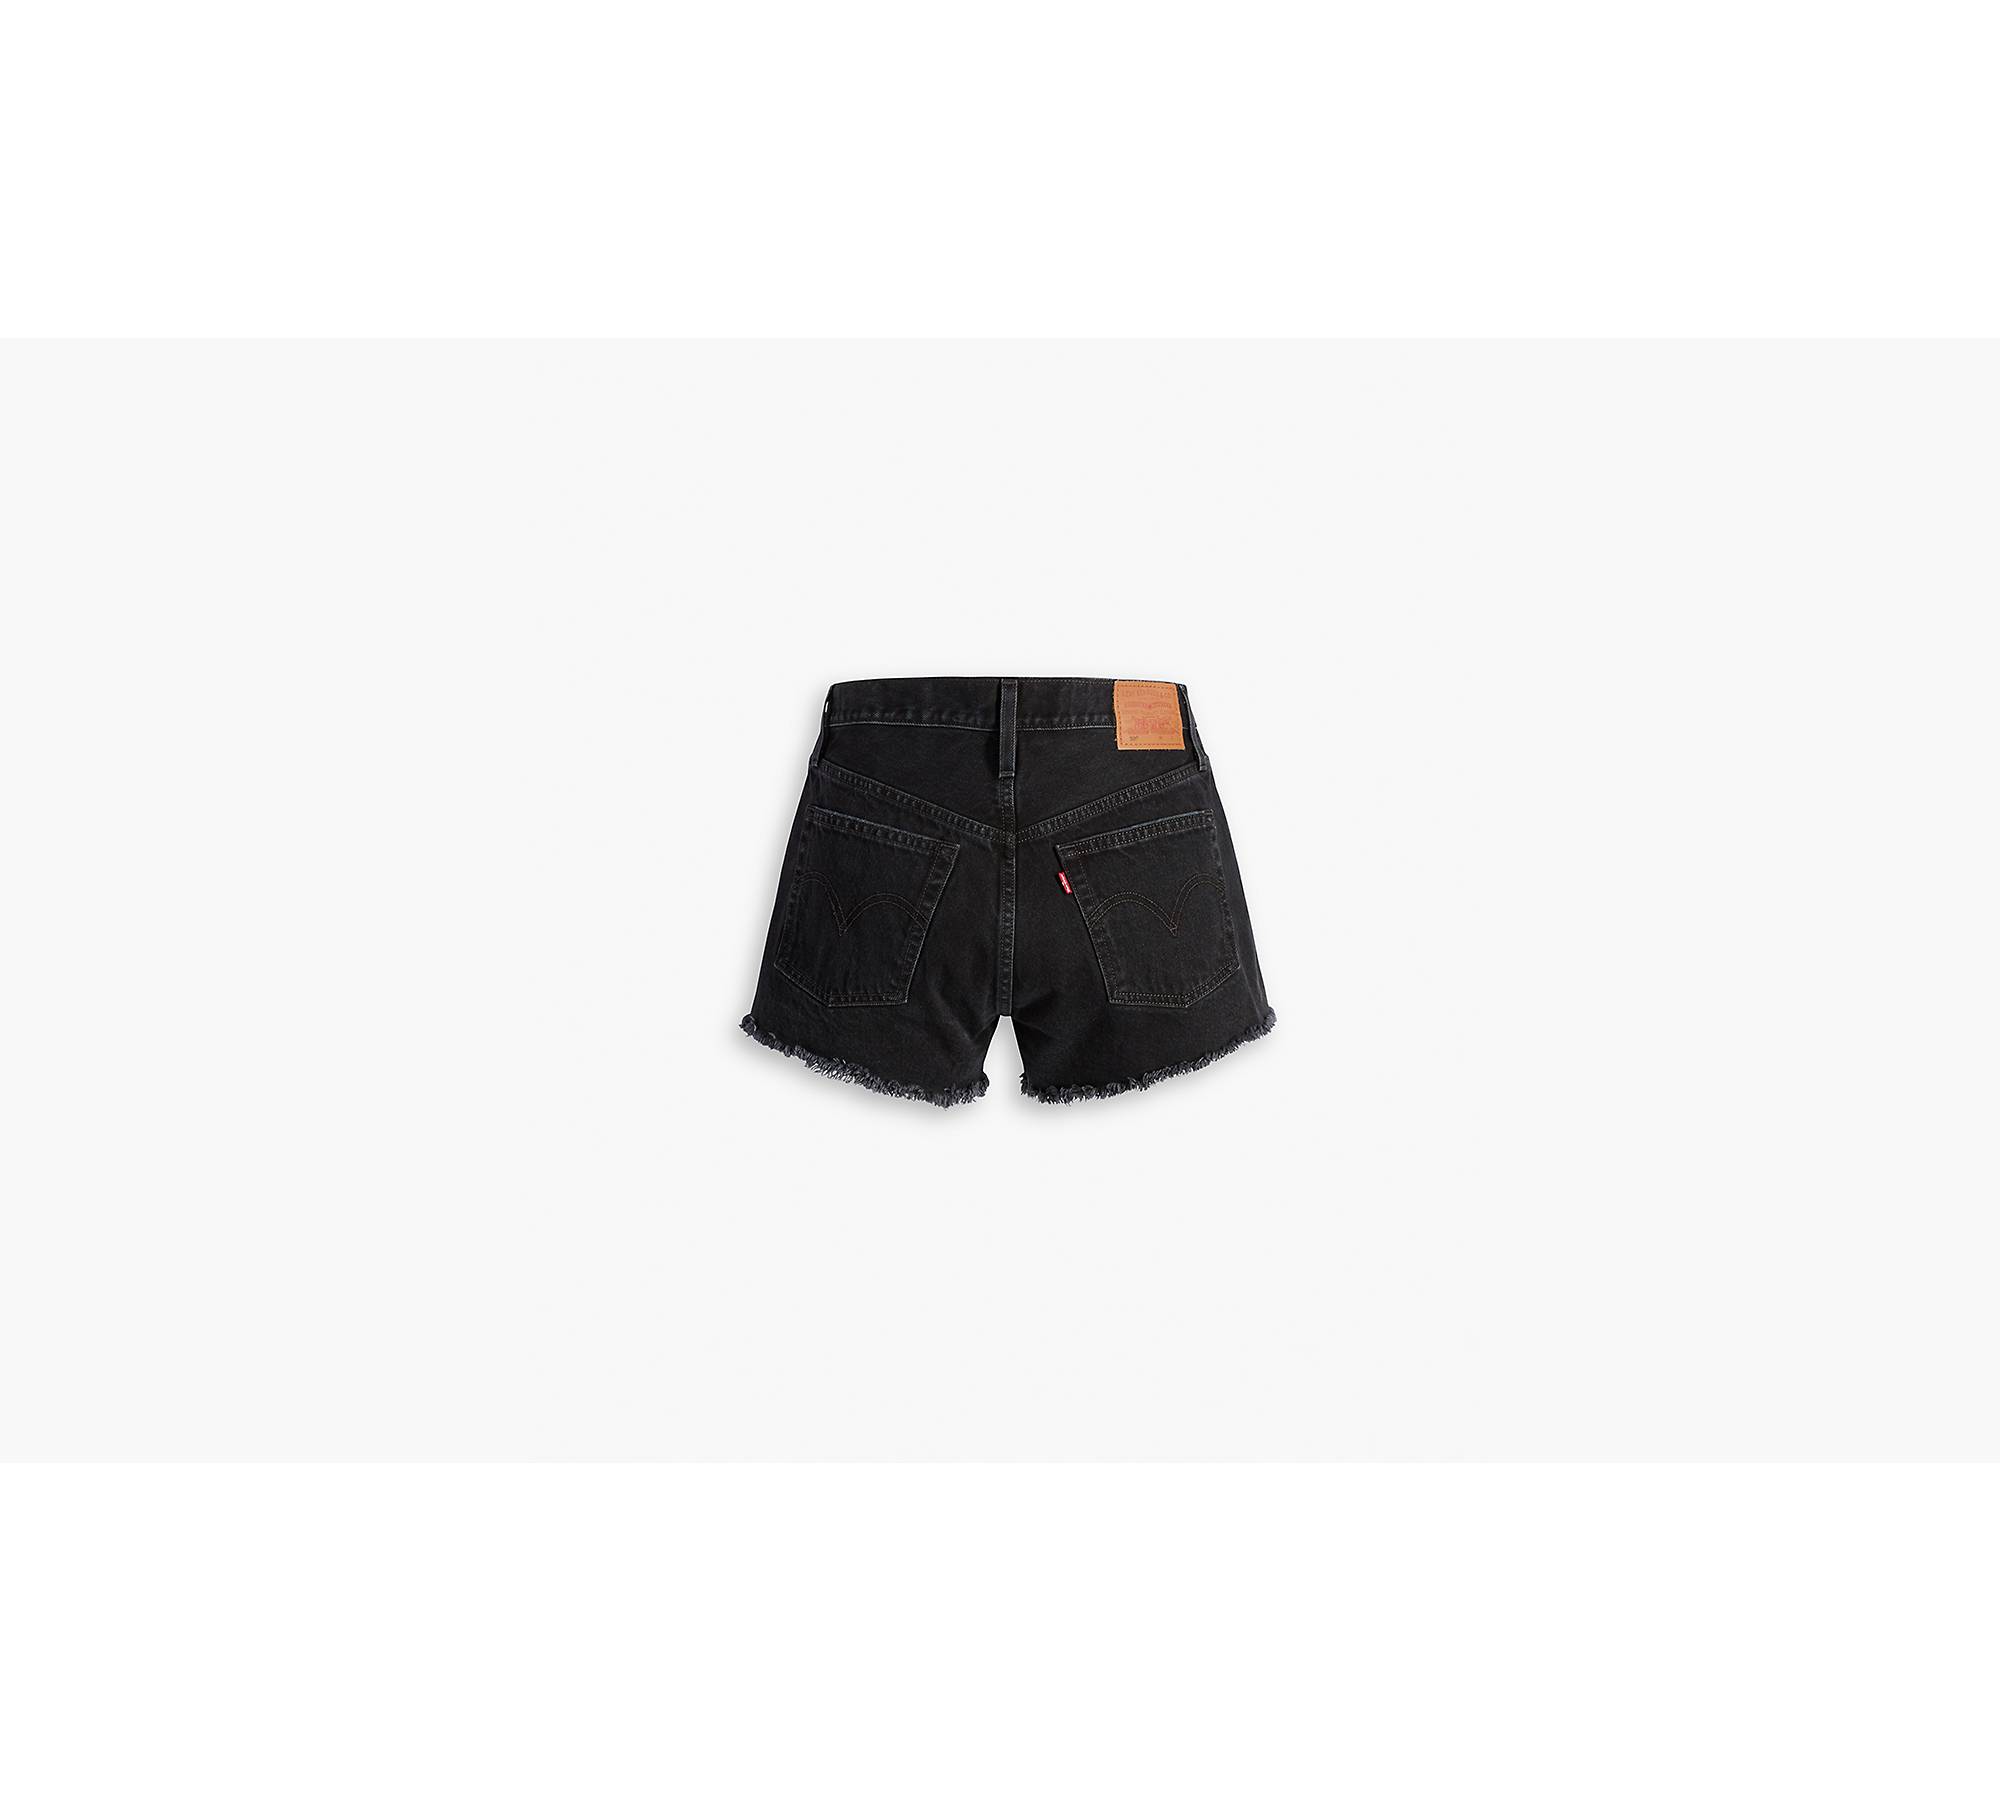 Purchase High Waist Shorts, black 800906 - 800911 at 1199 руб